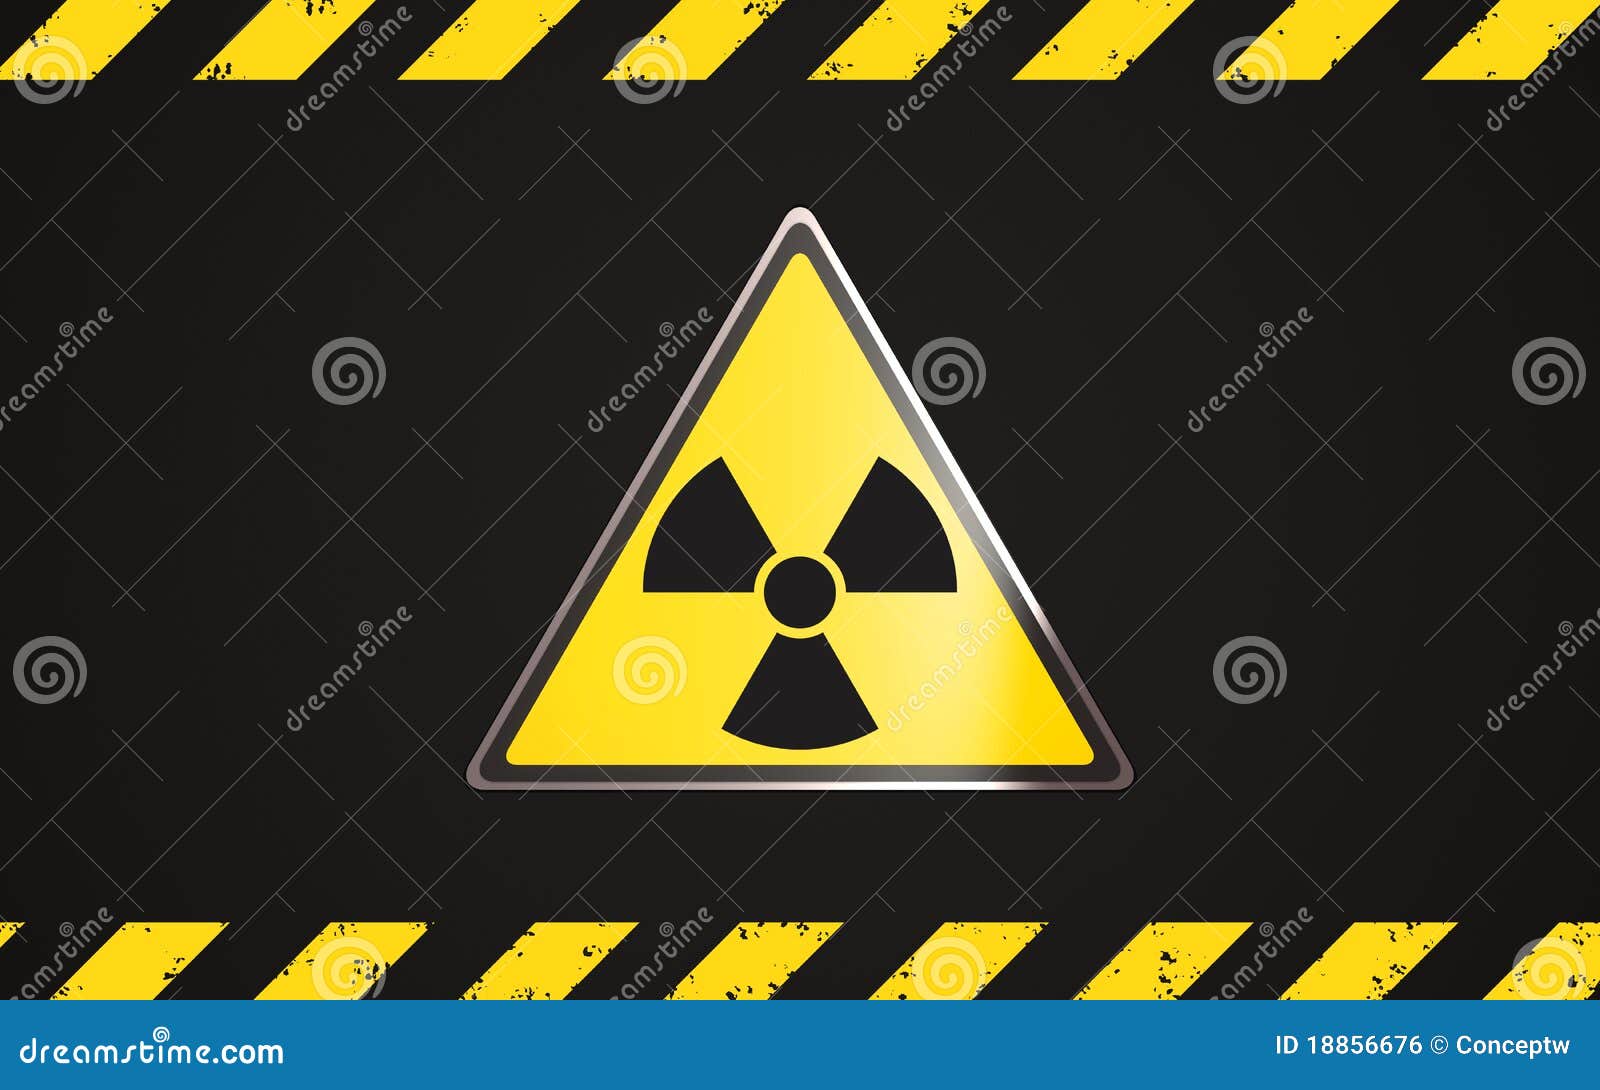 radioactive contamination hazard